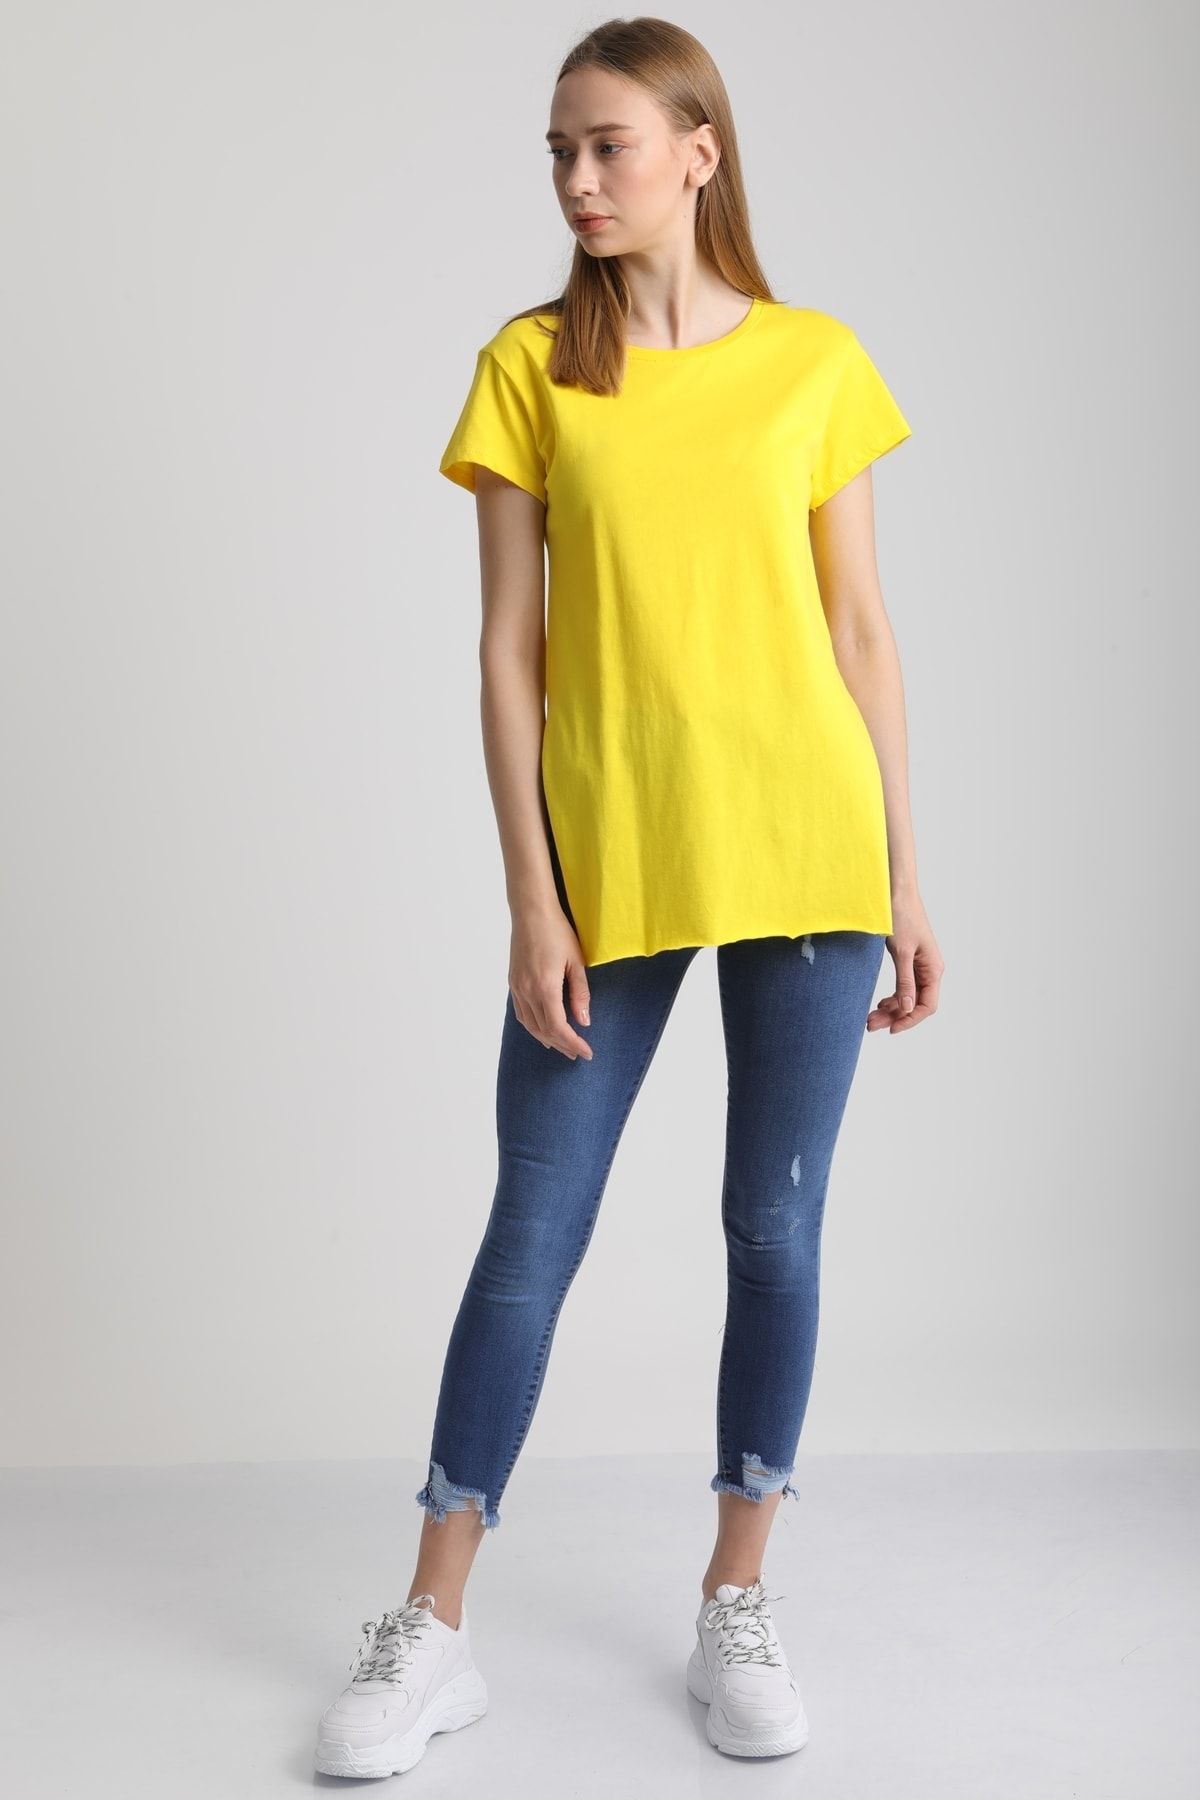 MD trend Kadın Bisiklet Yaka Yırtmaçlı Pamuklu T-shirt/sarı